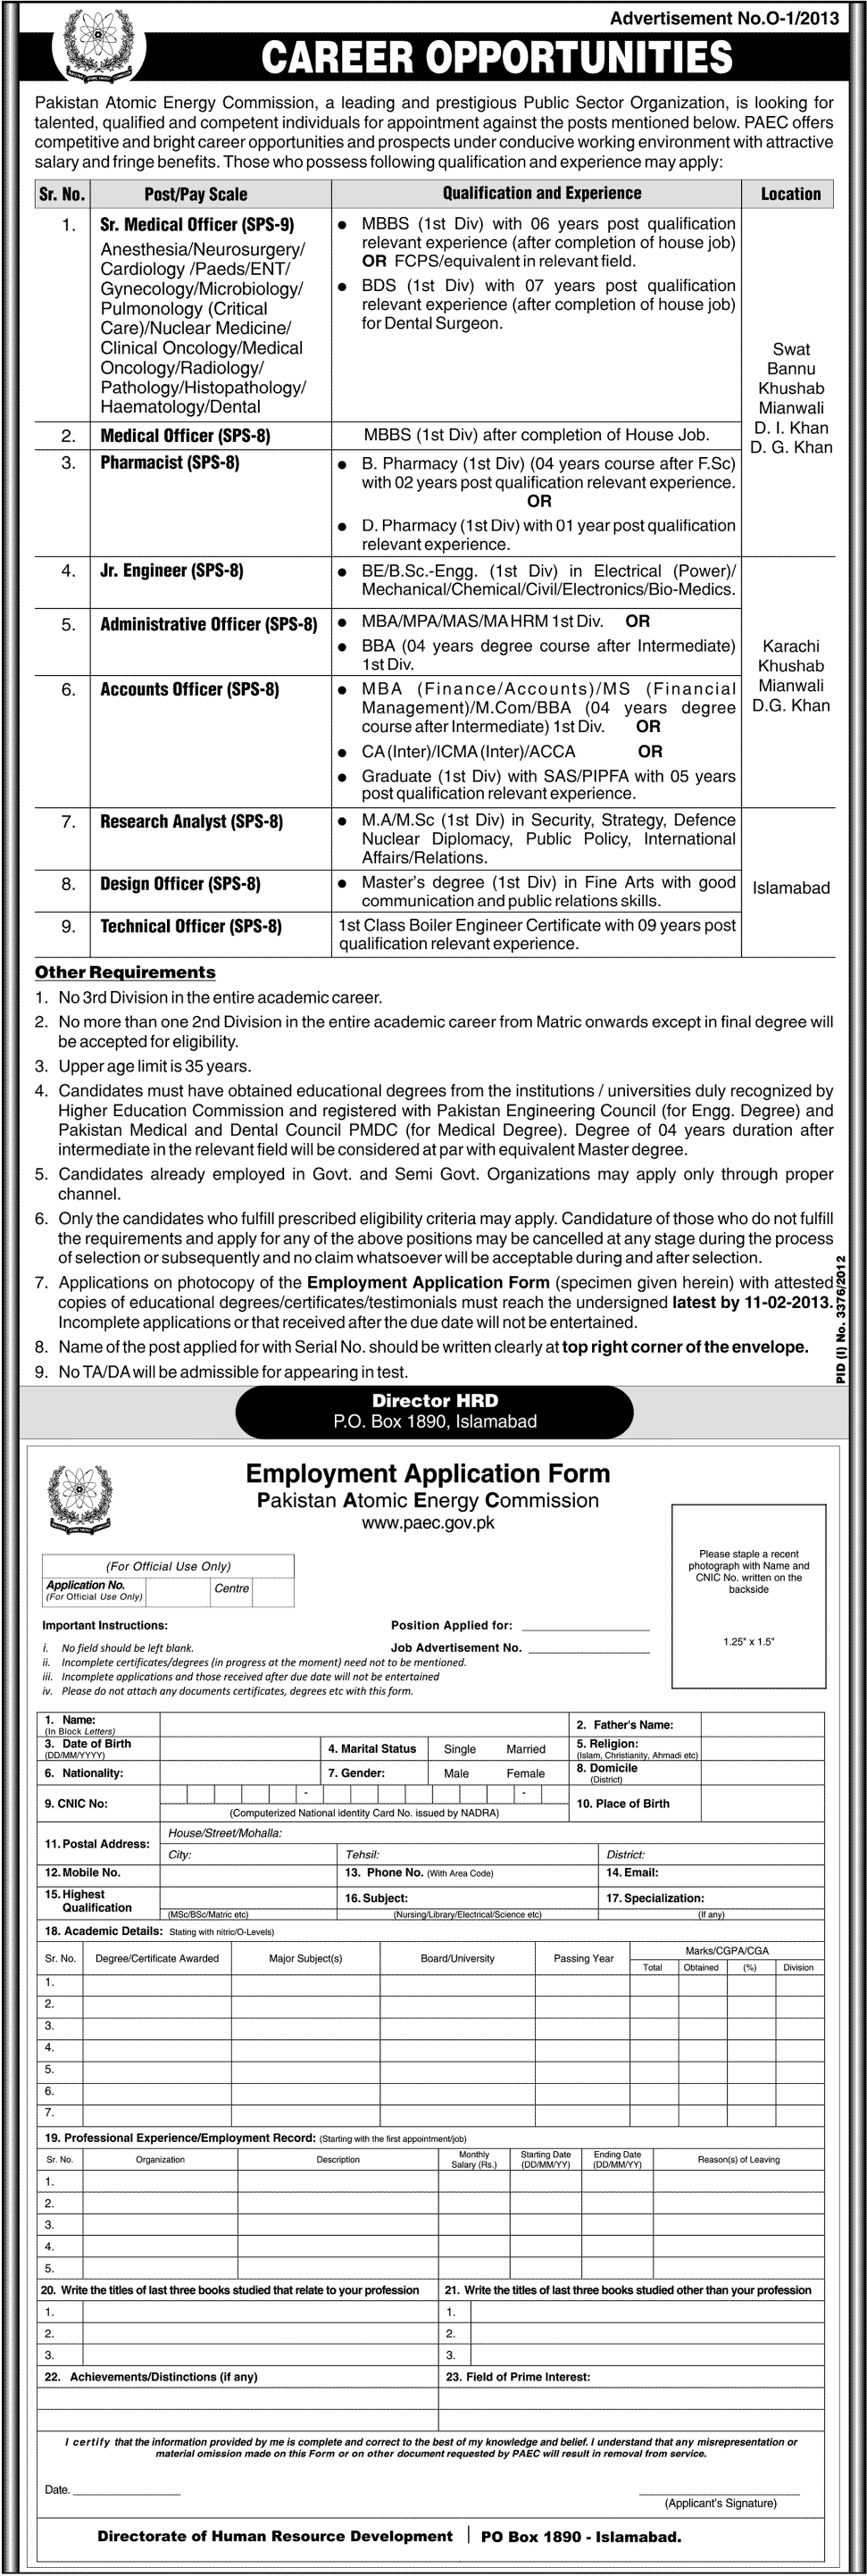 Pakistan Atomic Energy Commission Jobs 2013 Employment Application Form